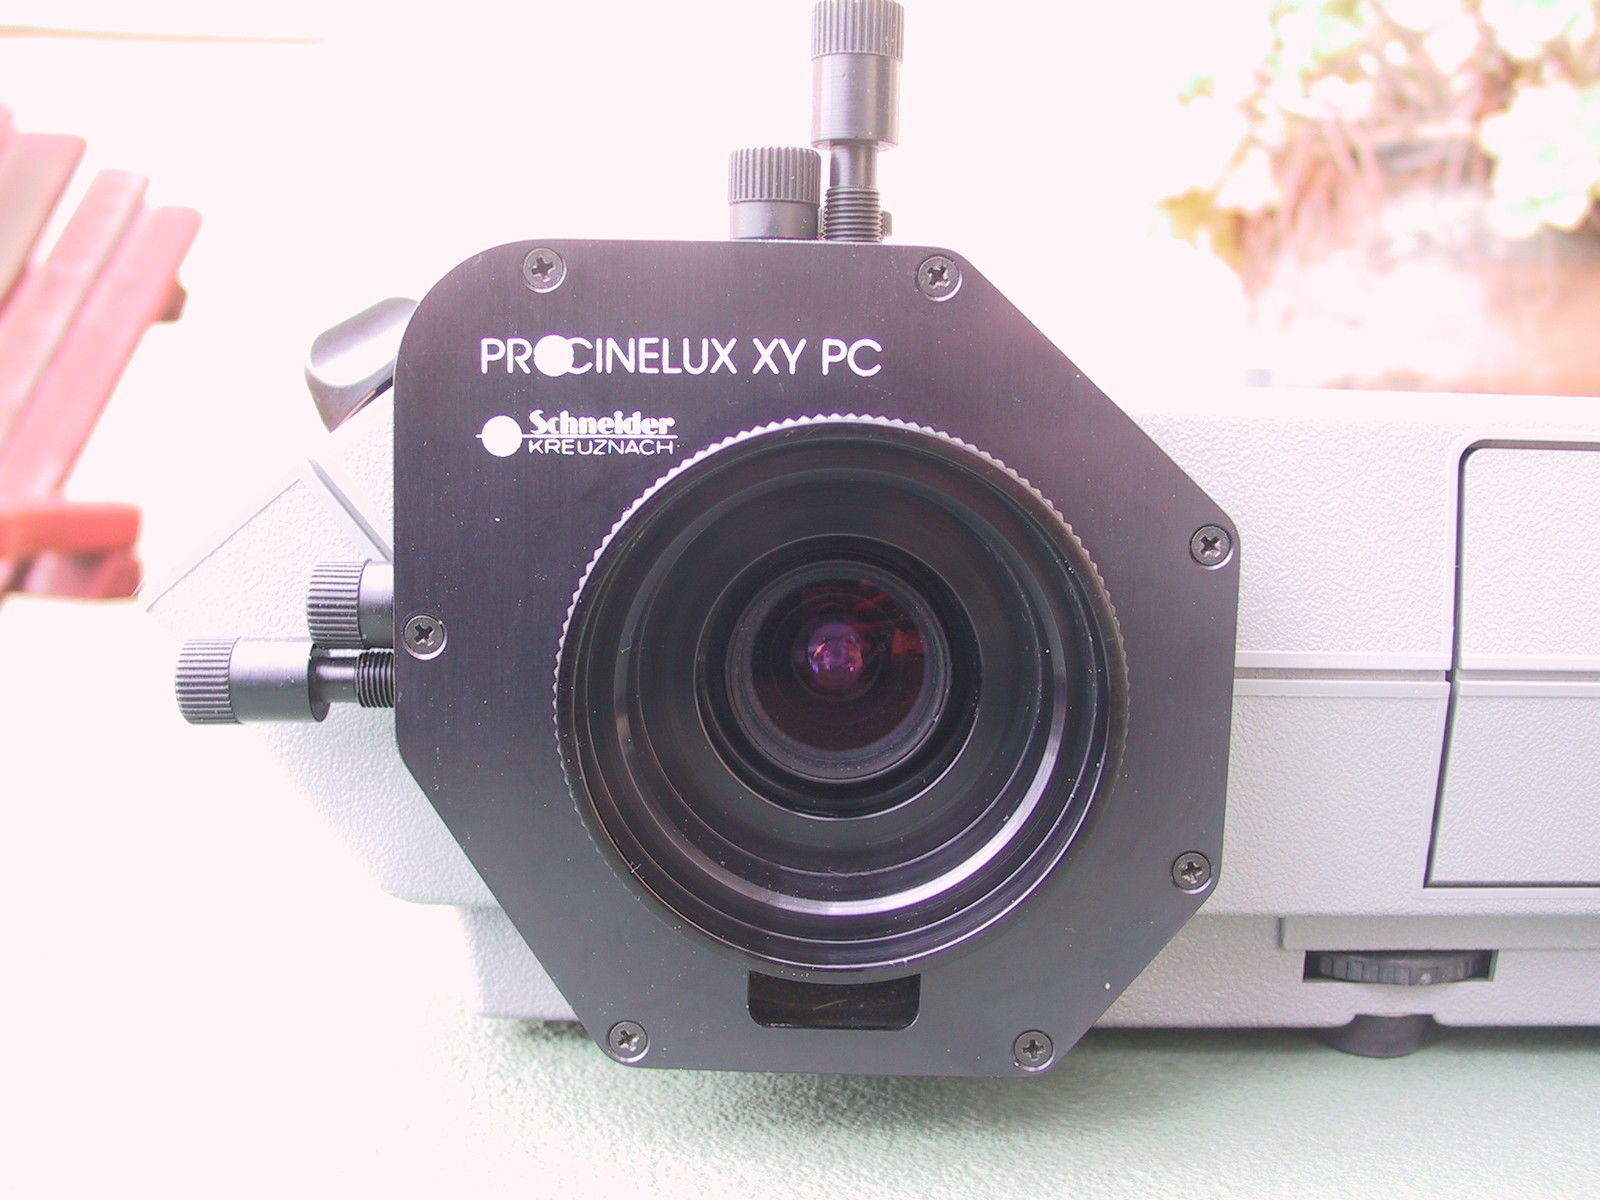 Schneider 35mm/2.8 PC Cinelux AV MC Projection Lens - KX Camera Kodak Slide Projectors Since 1980 - 1732-1/2 Grand Ave. Santa Barbara, CA 93103 805-963-5625